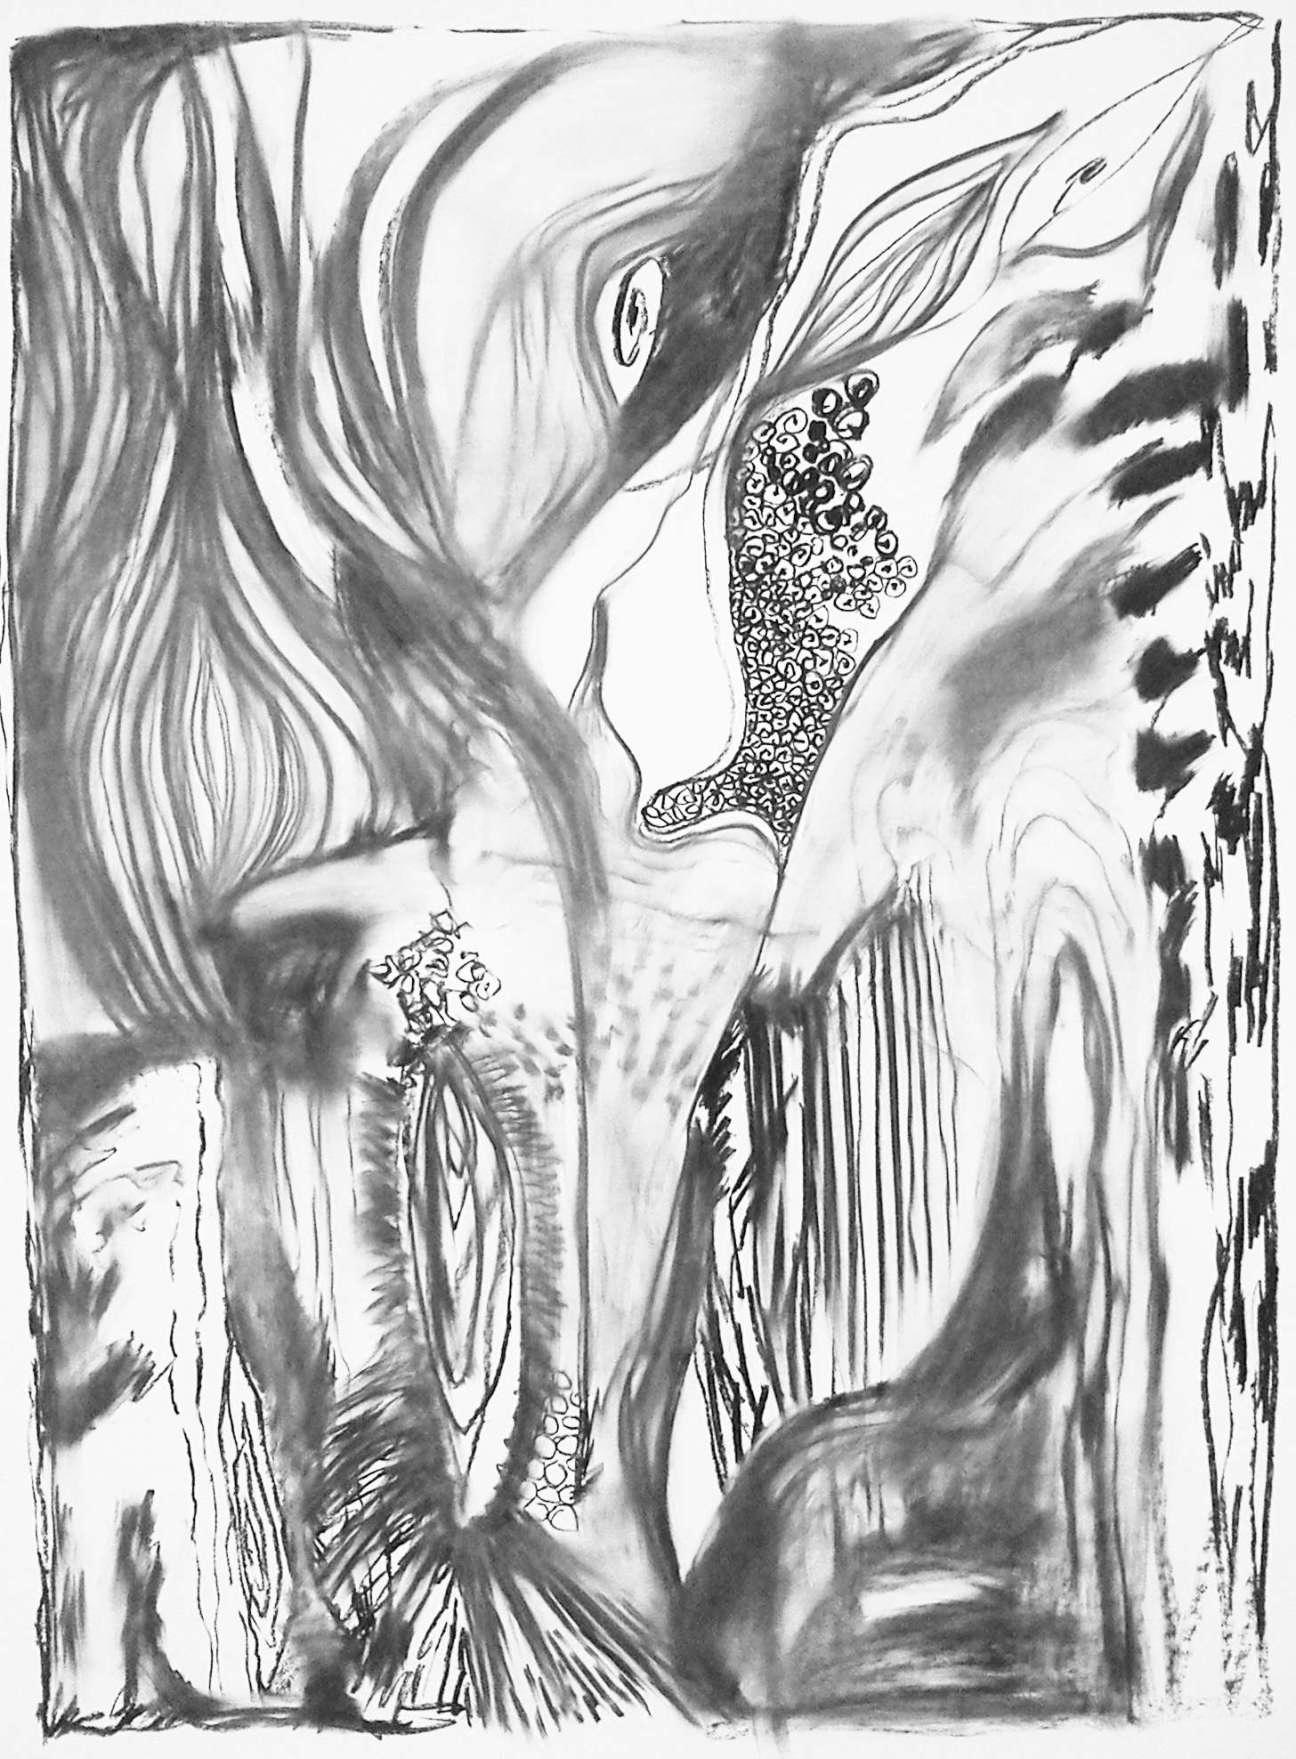 Sex Dreams, charcoal on paper, 150 x 100 cm